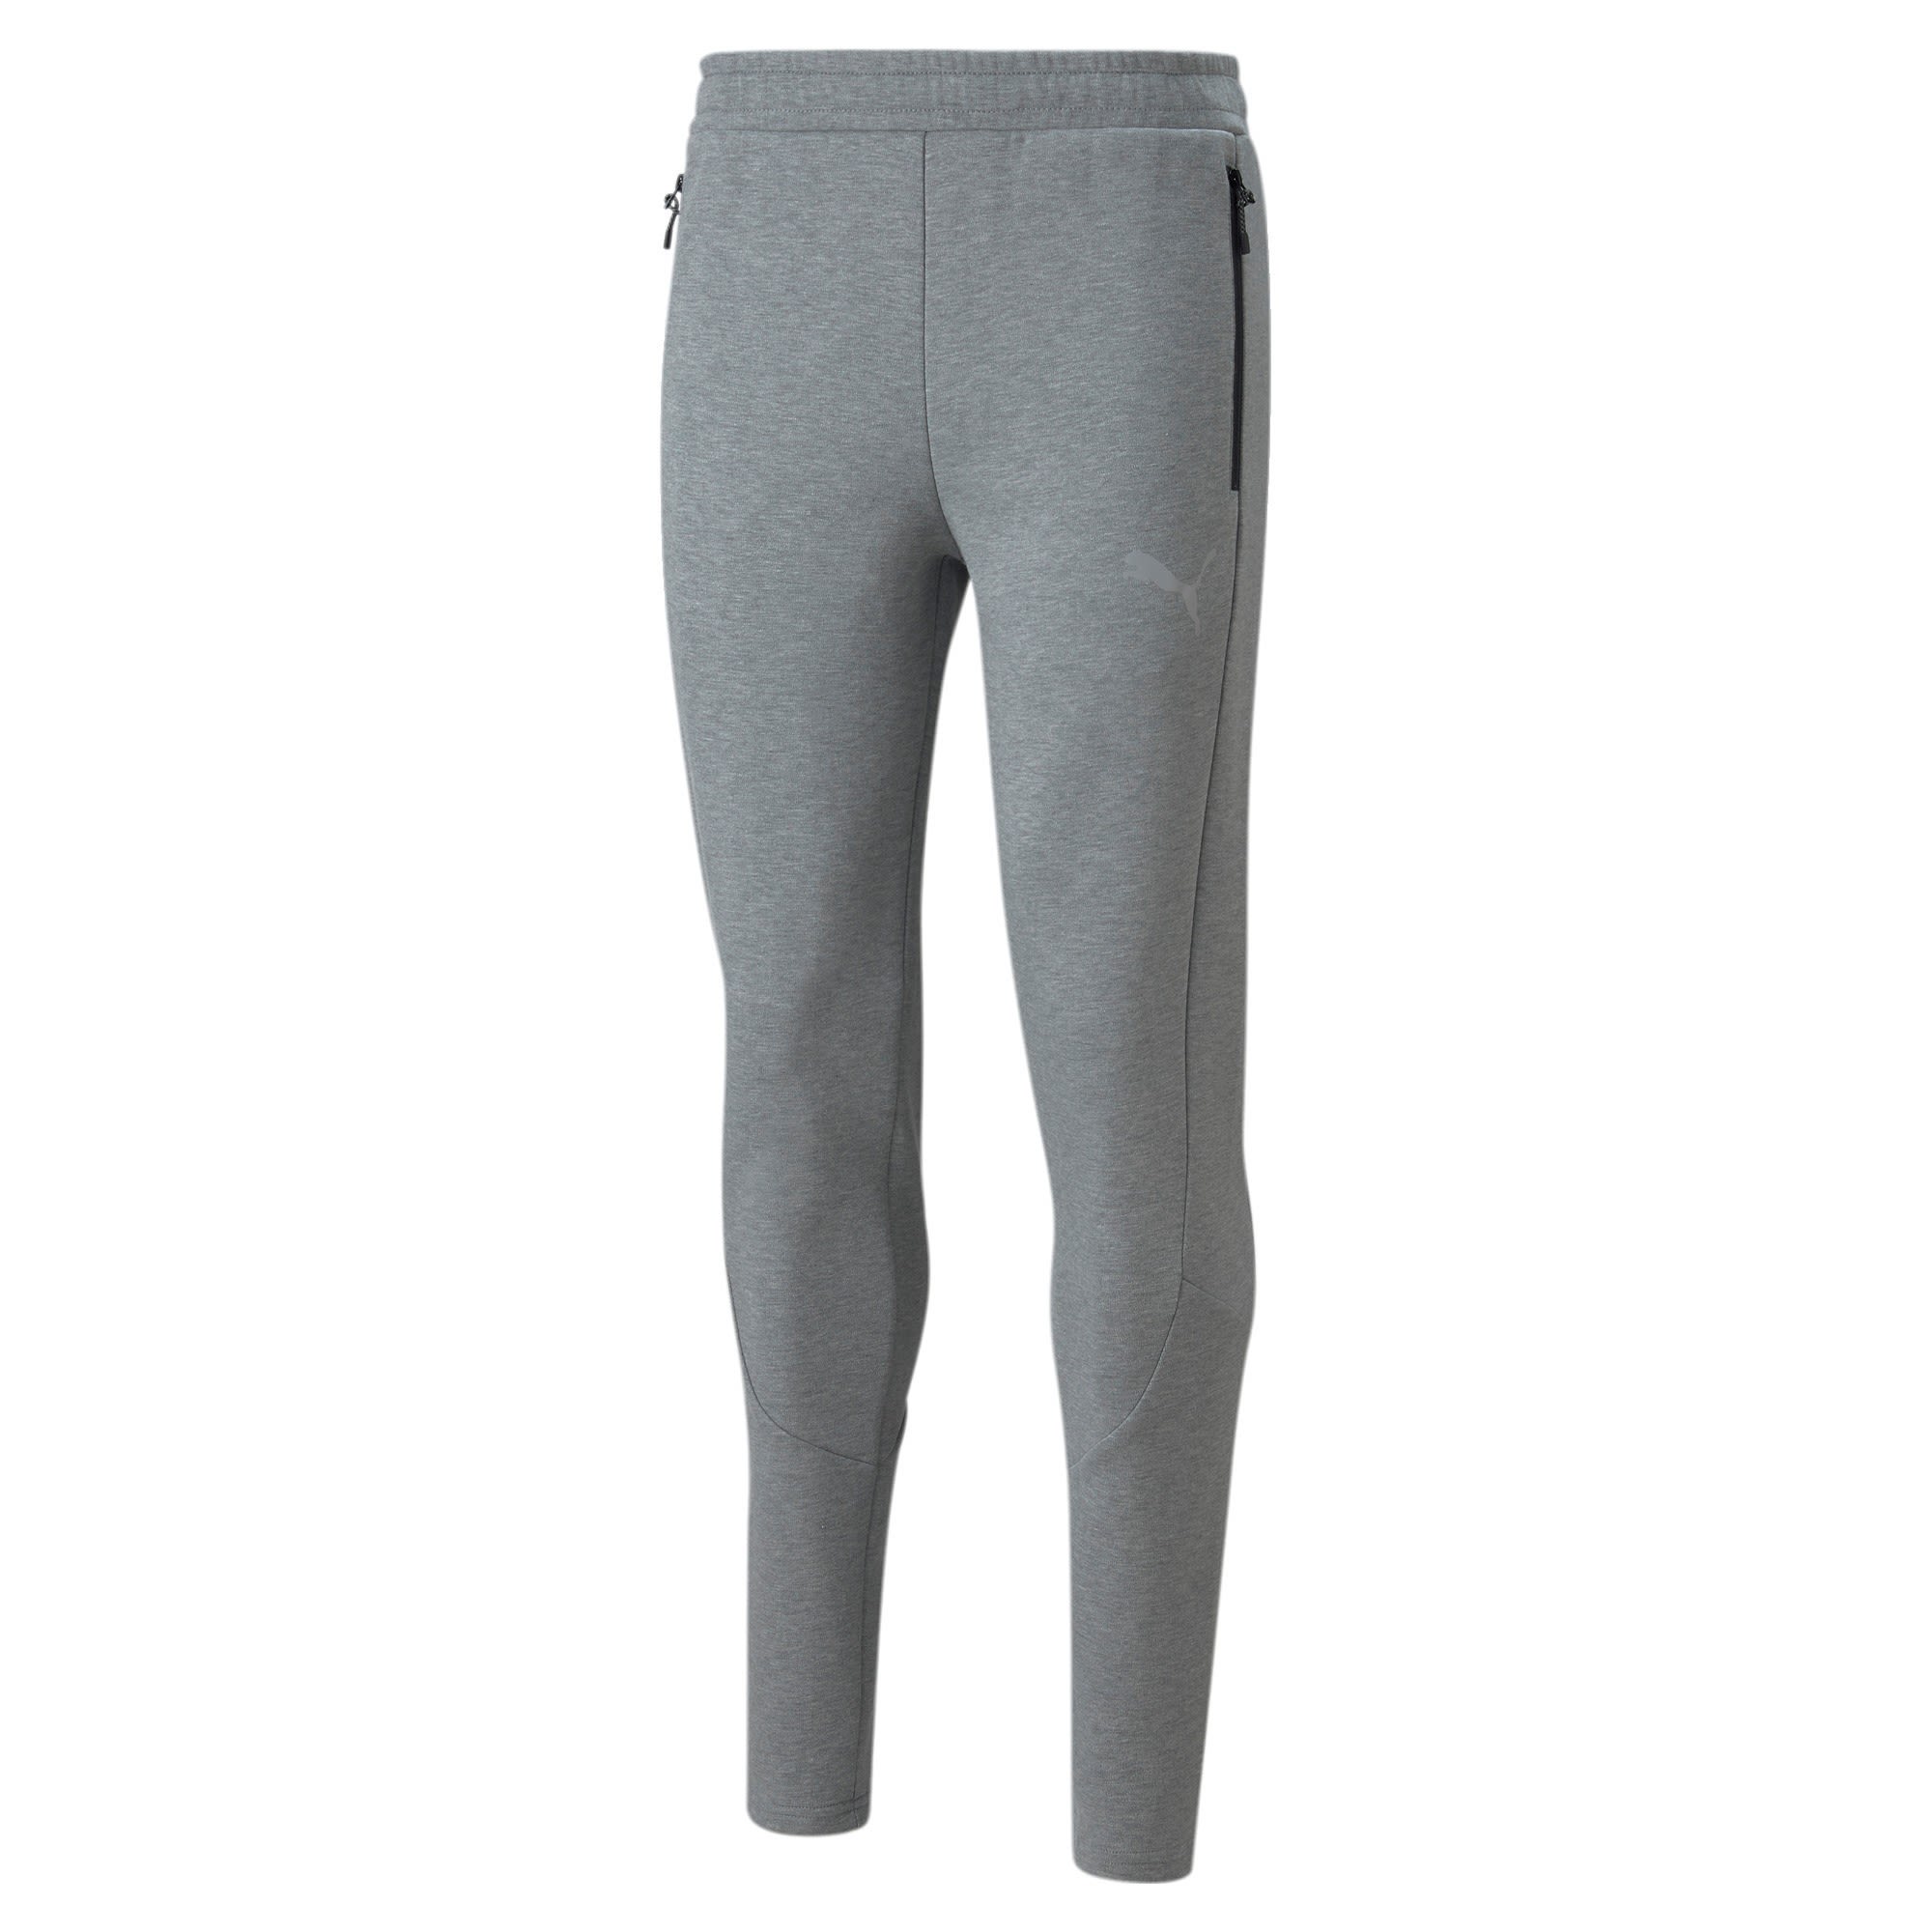 Puma Evostripe Pants Grau- Male Softshellhosen- Grsse XL - Farbe Medium Gray Heather